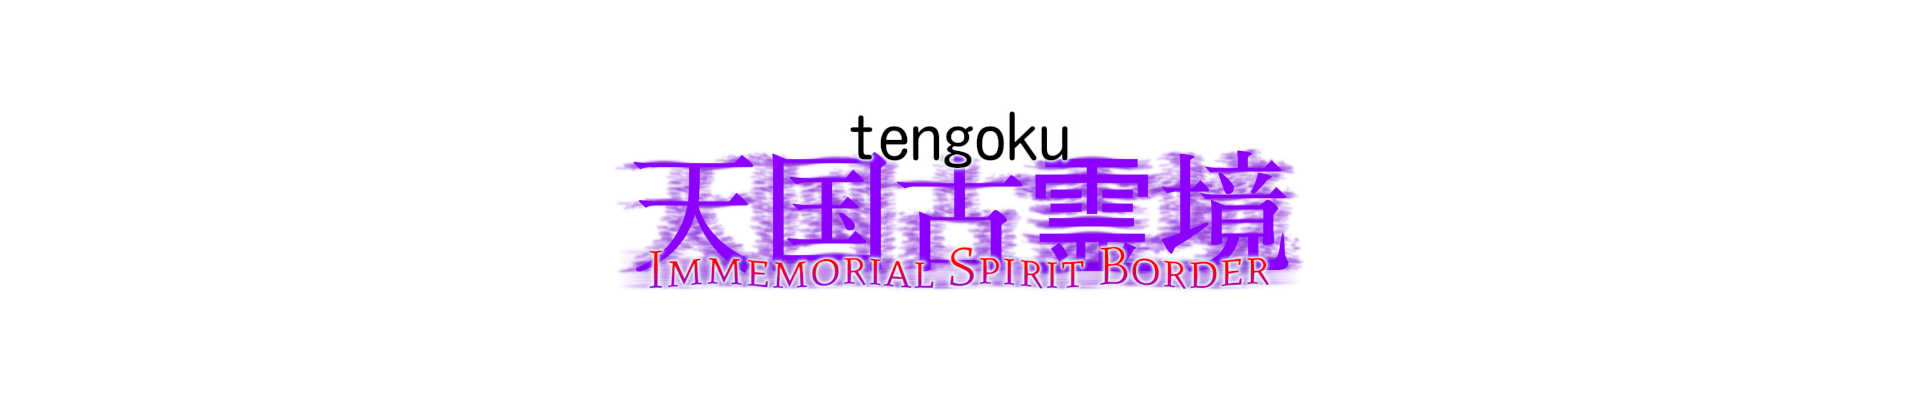 Tengoku 2: 天国古霊境 〜 Immemorial Spirit Border